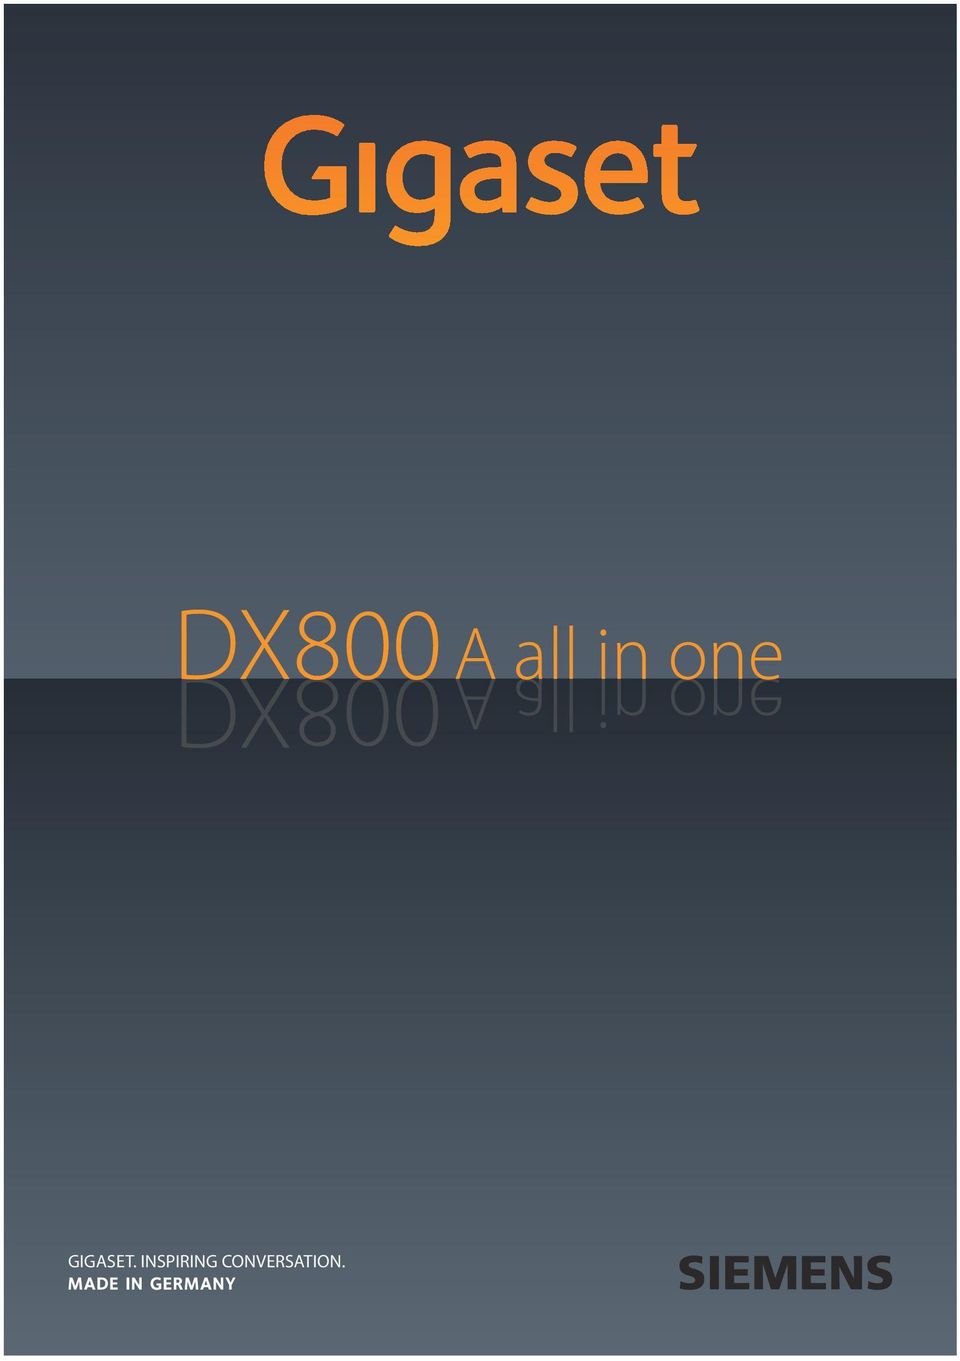 DX800 GIGASET.